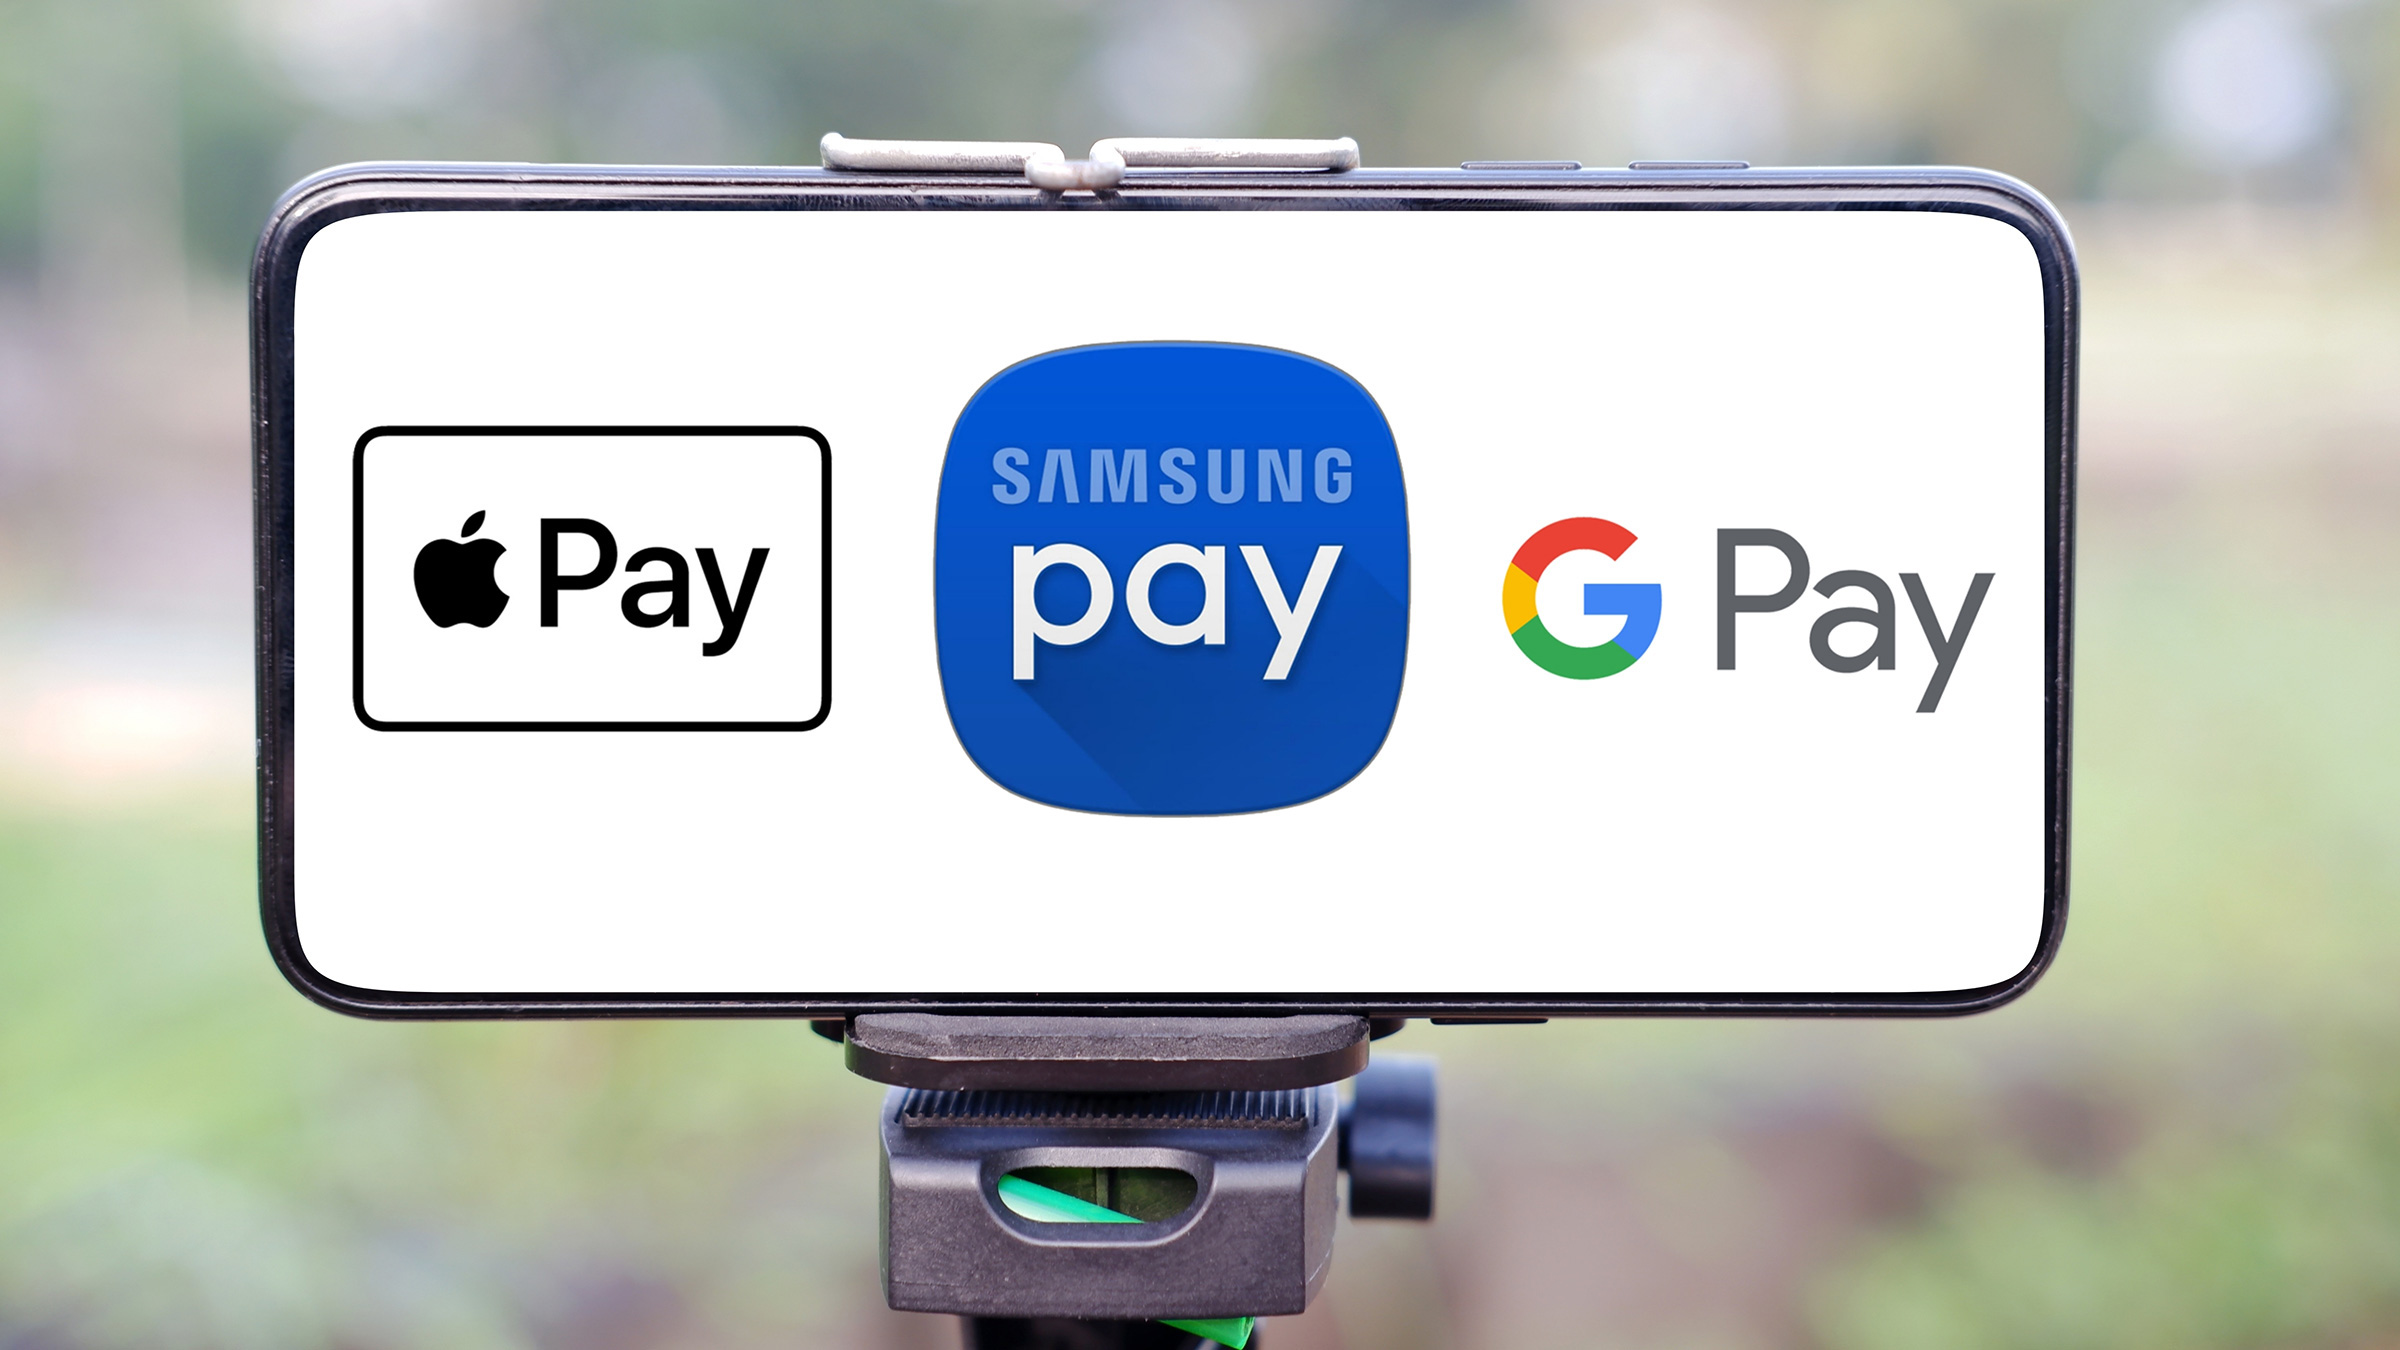 digital payment platform logos on a smartphone